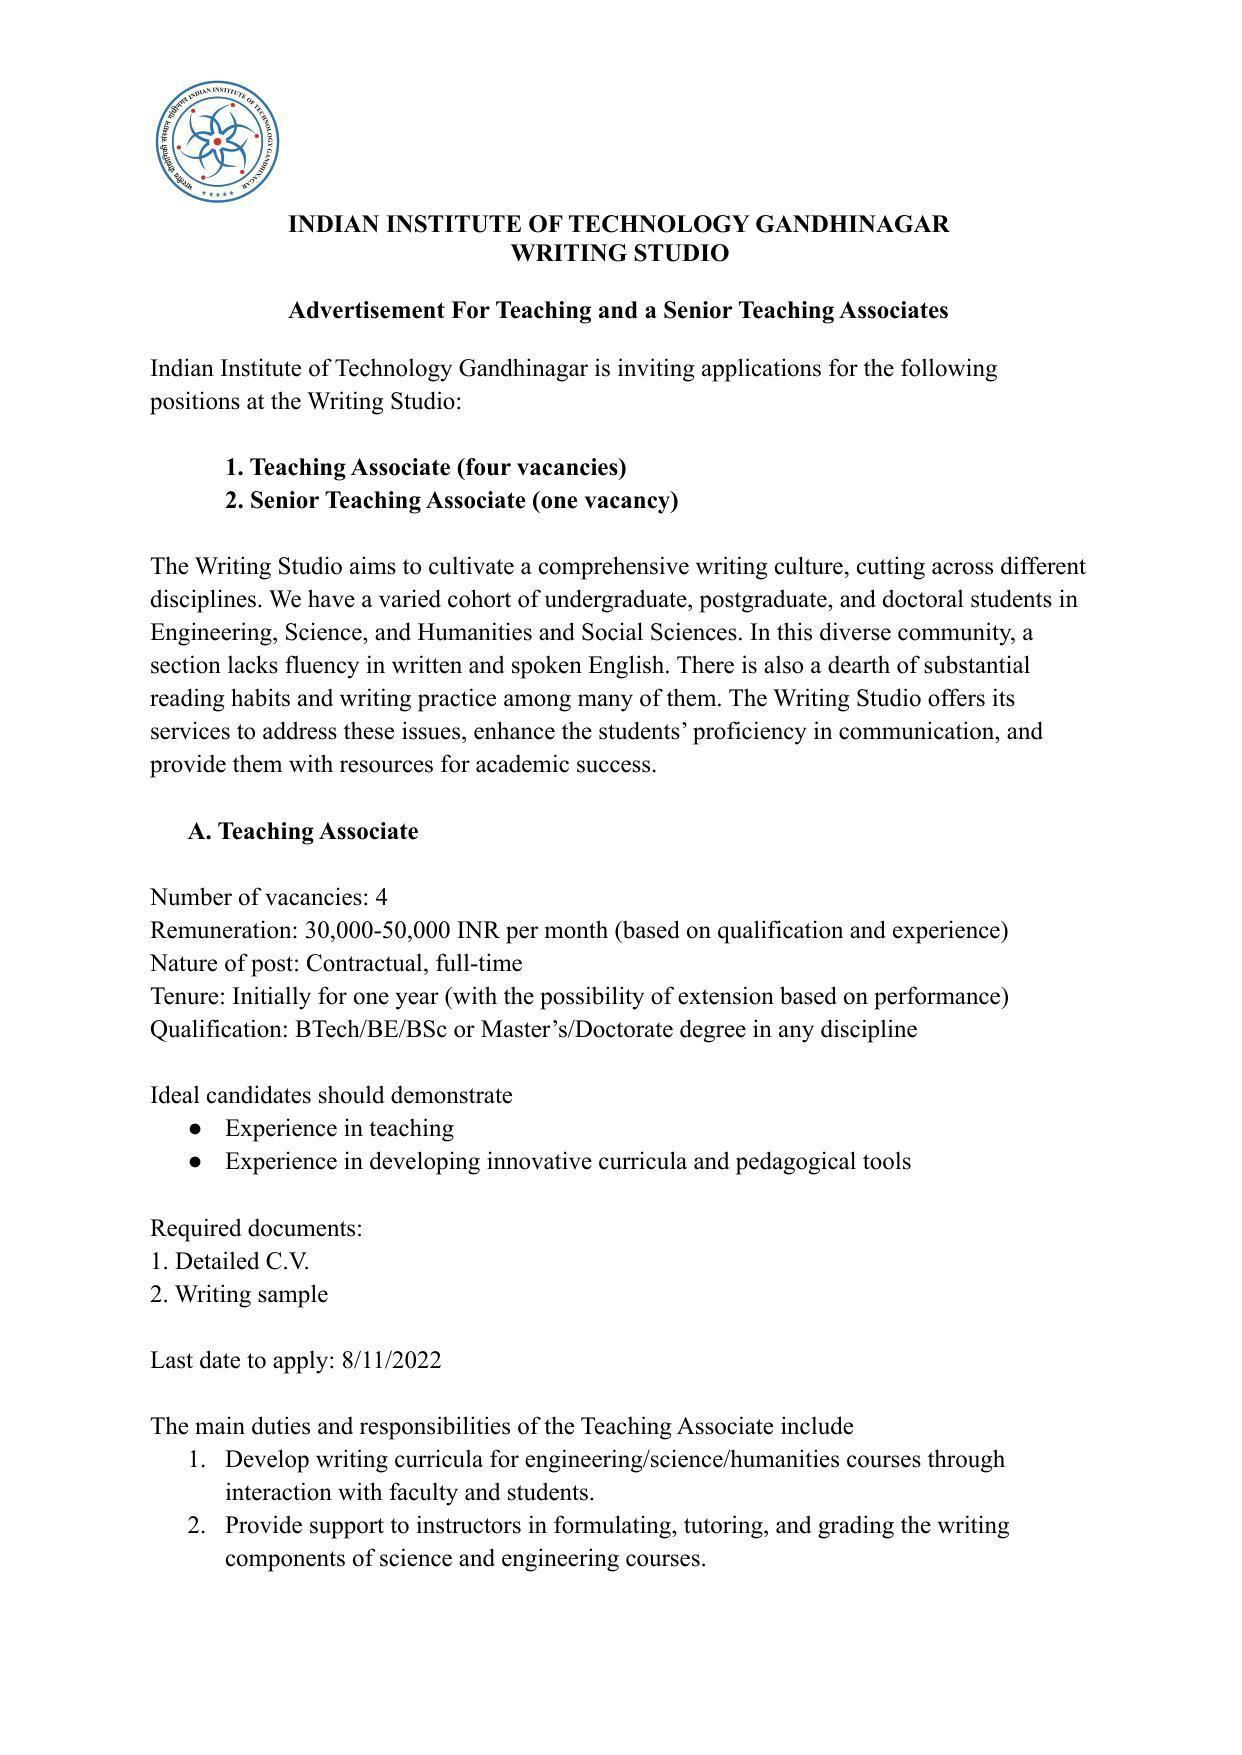 IIT Gandhinagar Invites Application for Teaching Associate, Senior Teaching Associate Recruitment 2022 - Page 2